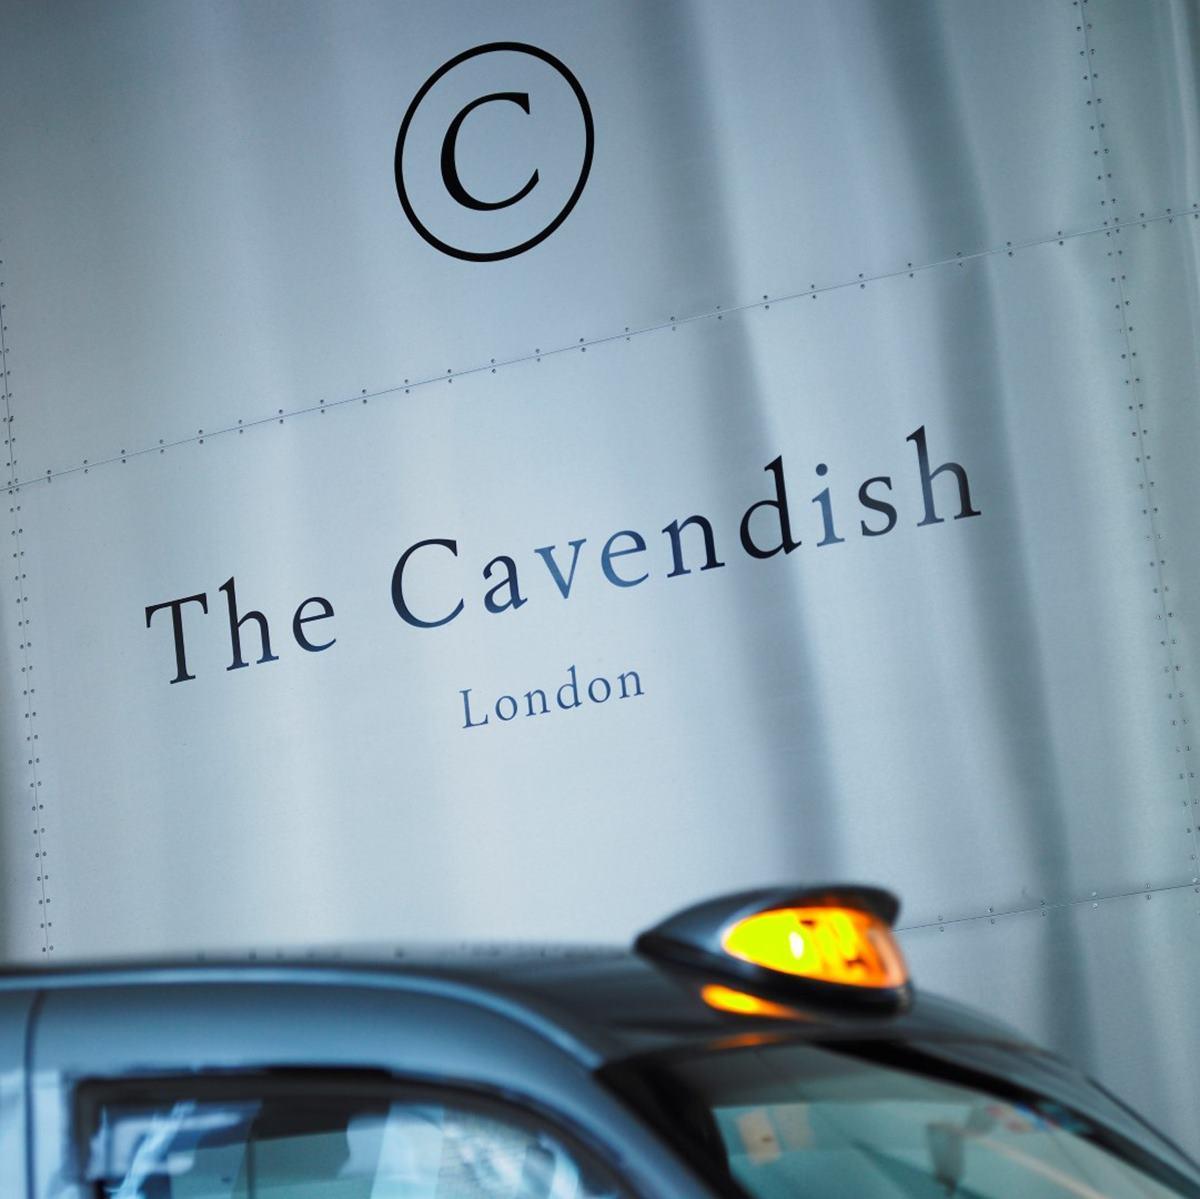 The Cavendish London, Cirrus photo #2